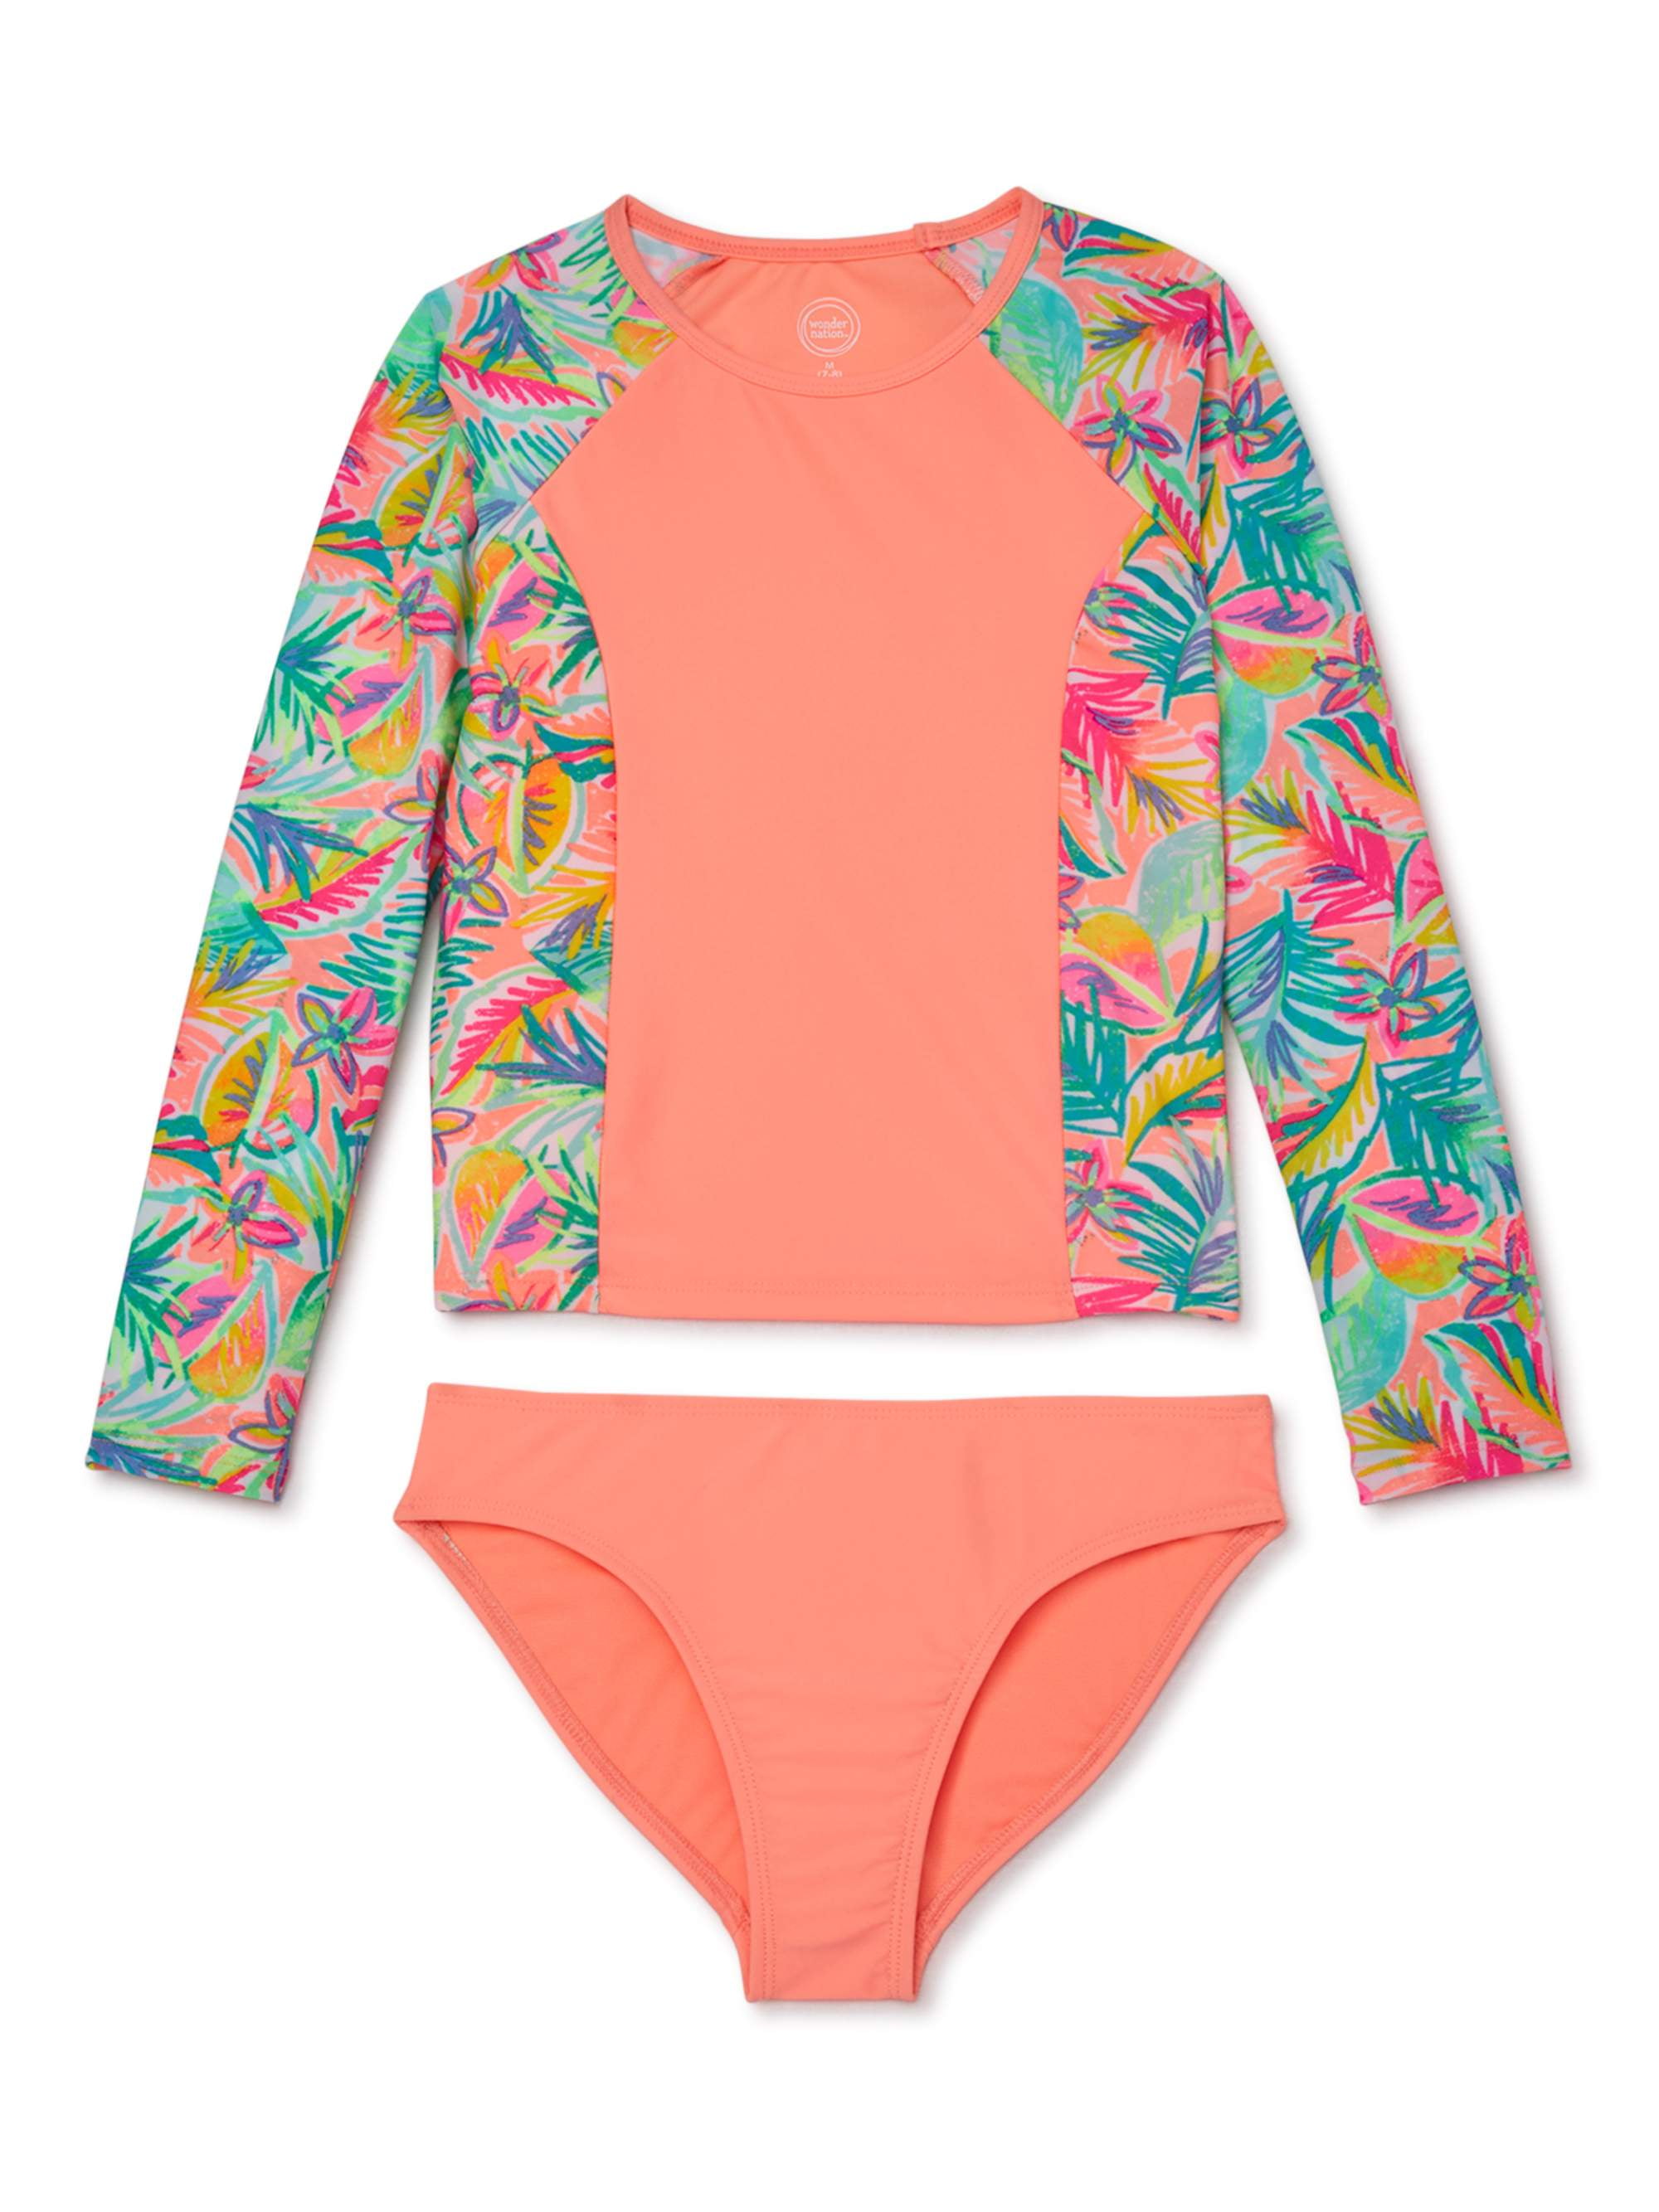 moily Baby Girls Floral Printed Ruffles Long Sleeve Rashguard Shirts with Bottoms Beachwear